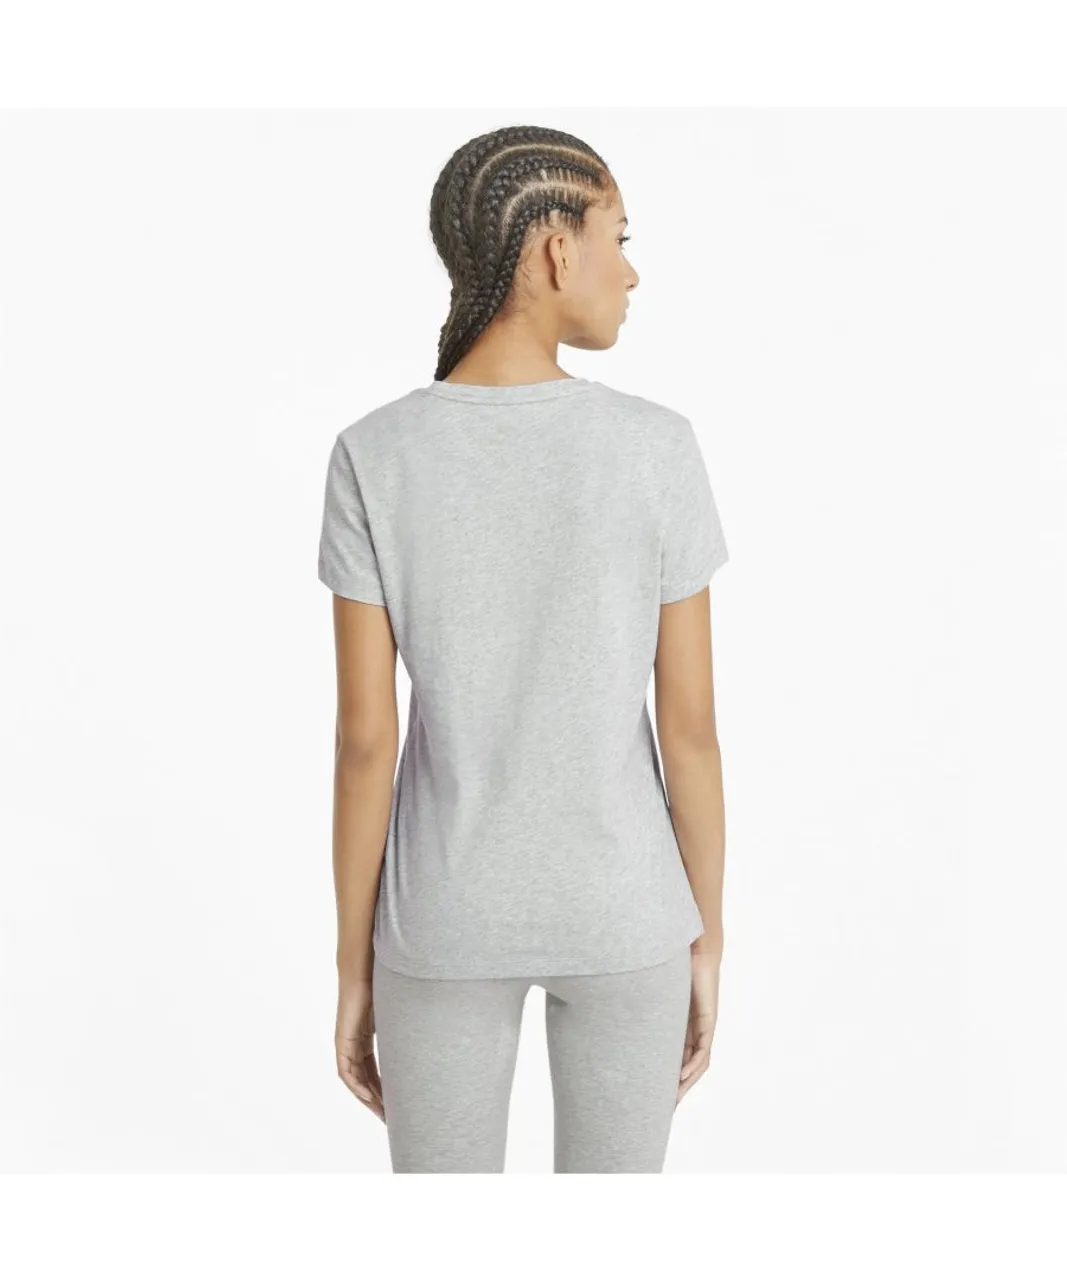 Puma WoMens Essentials Logo Tee T-Shirt - Grey Cotton